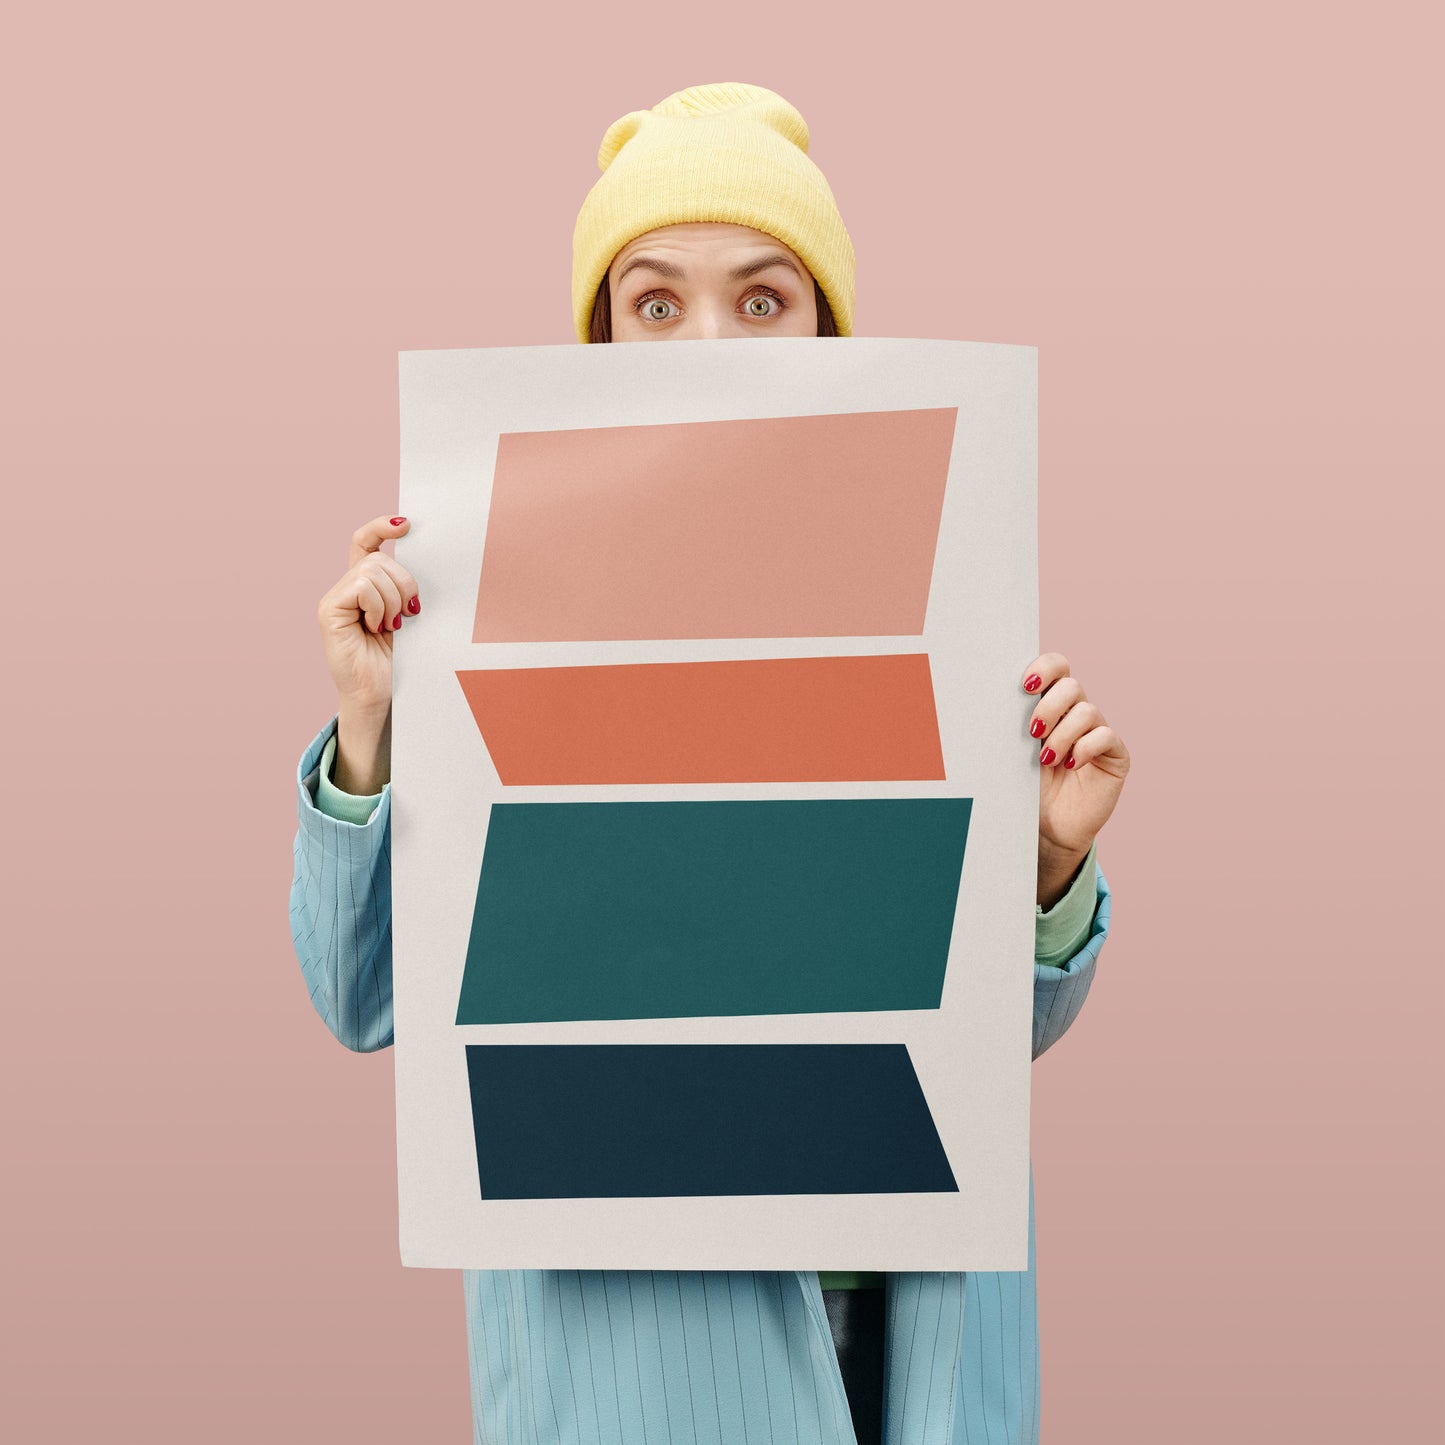 Colorblocks Minimalist Poster